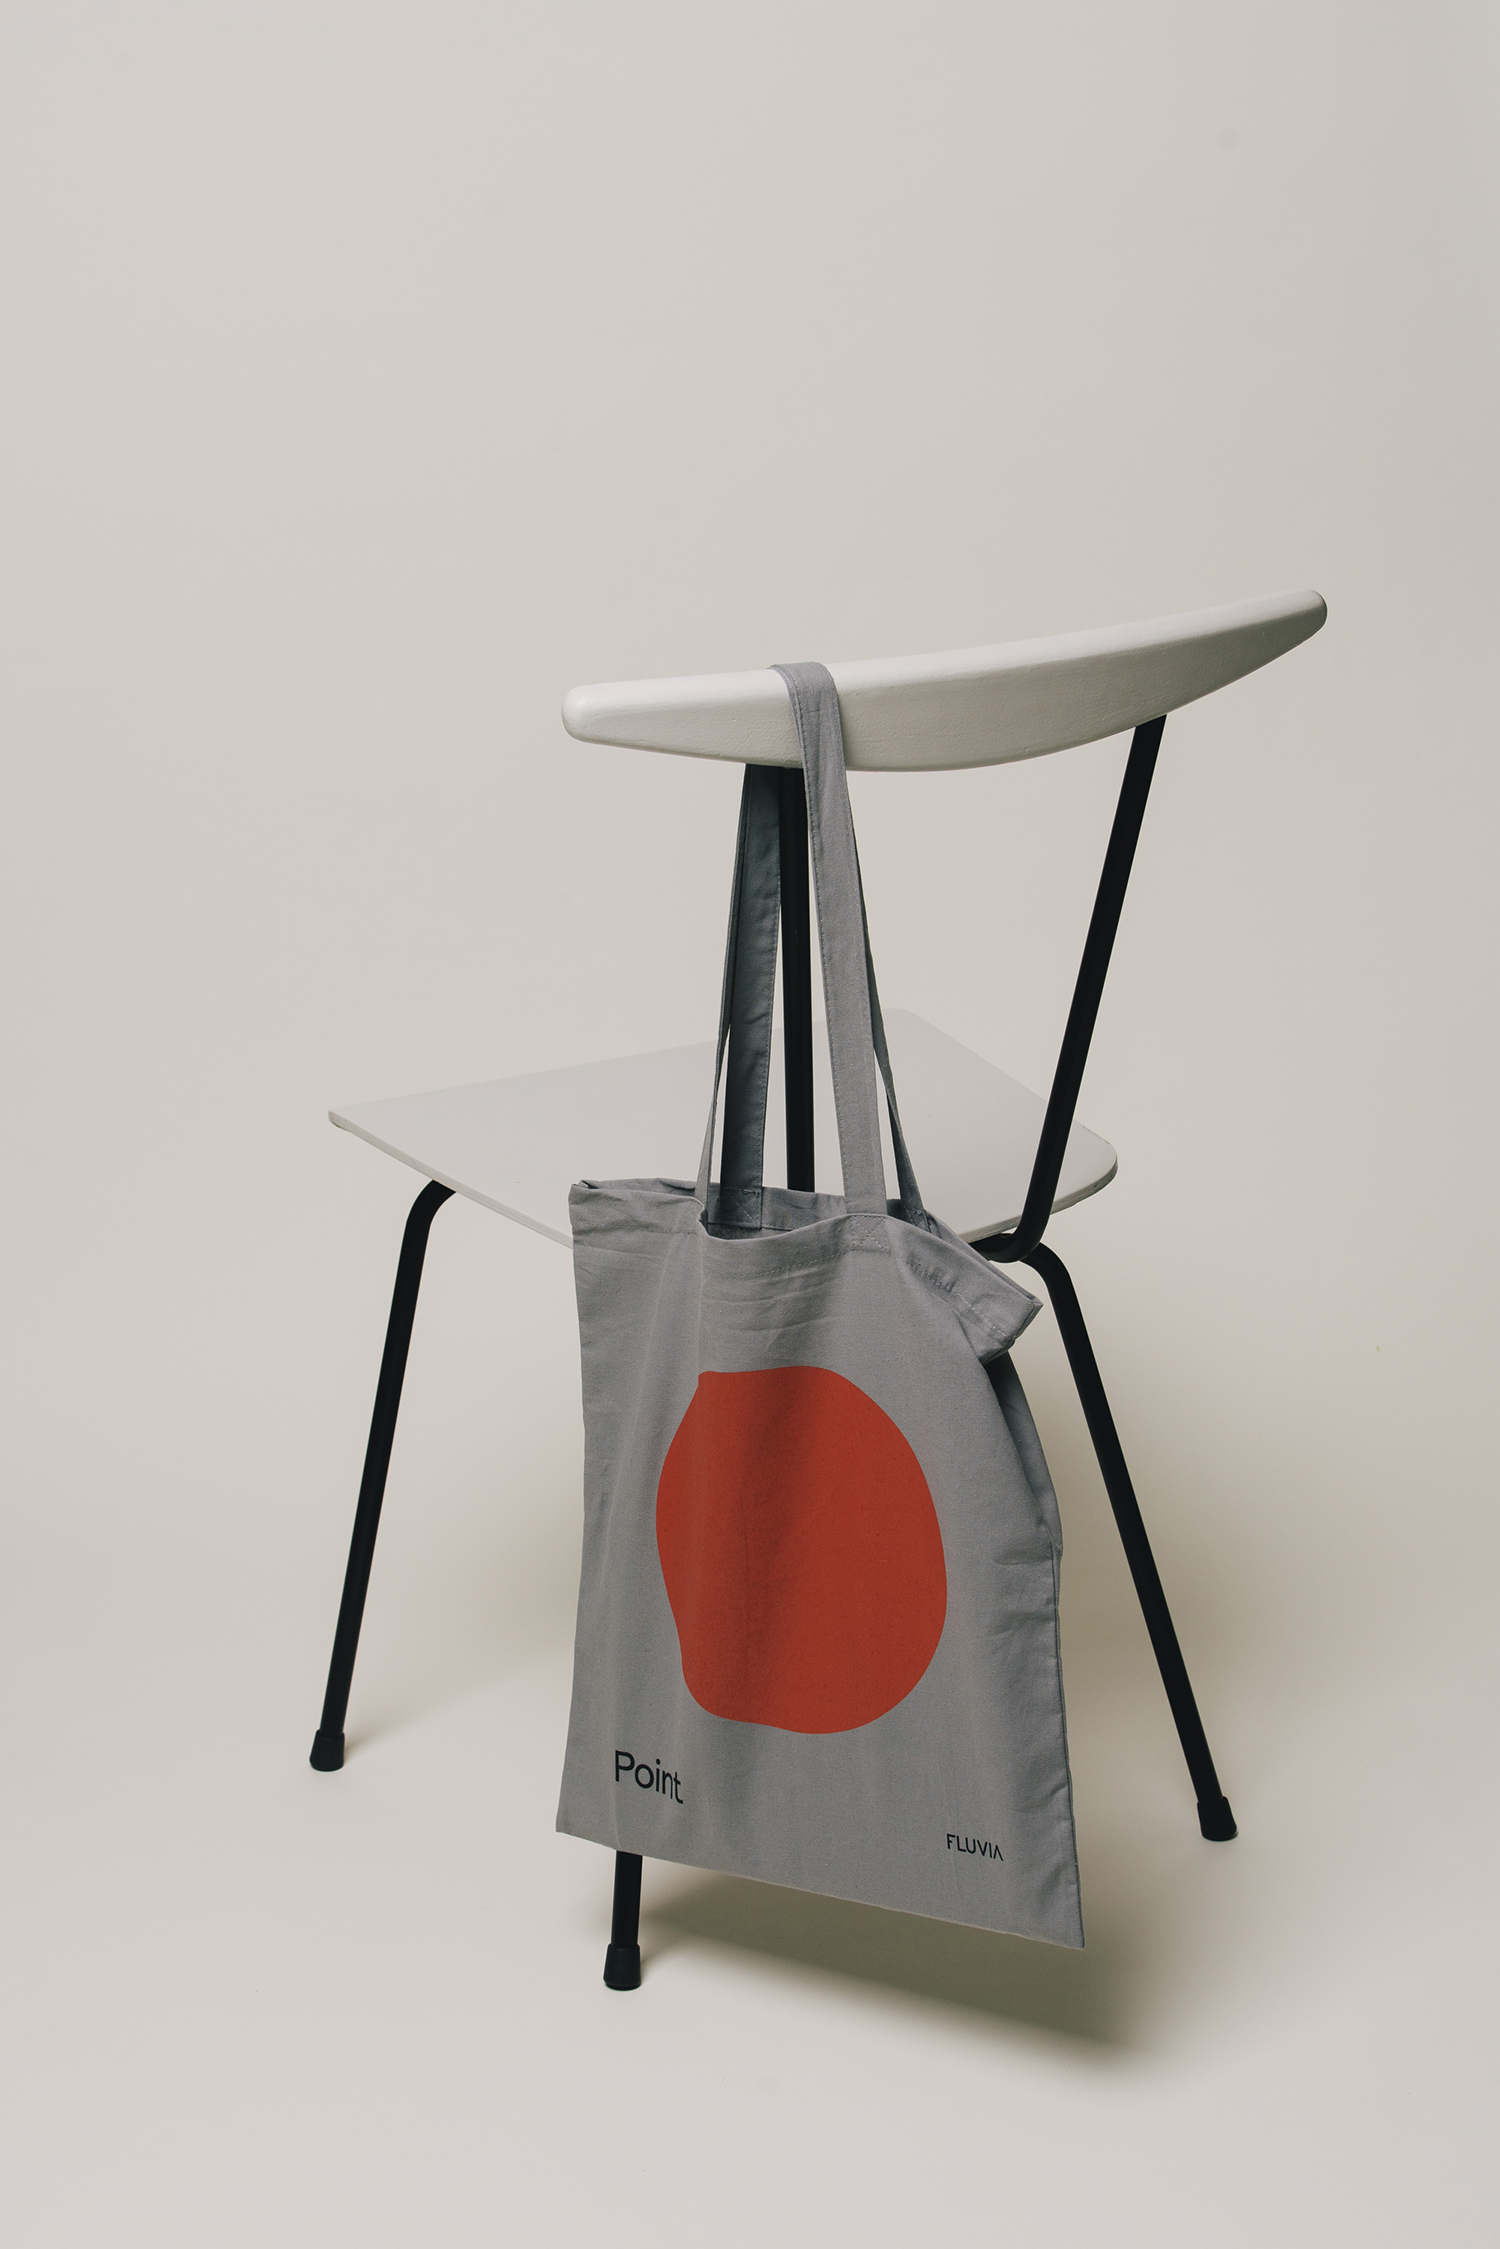 Tote Bag Design – Fluvia by Folch, Spain